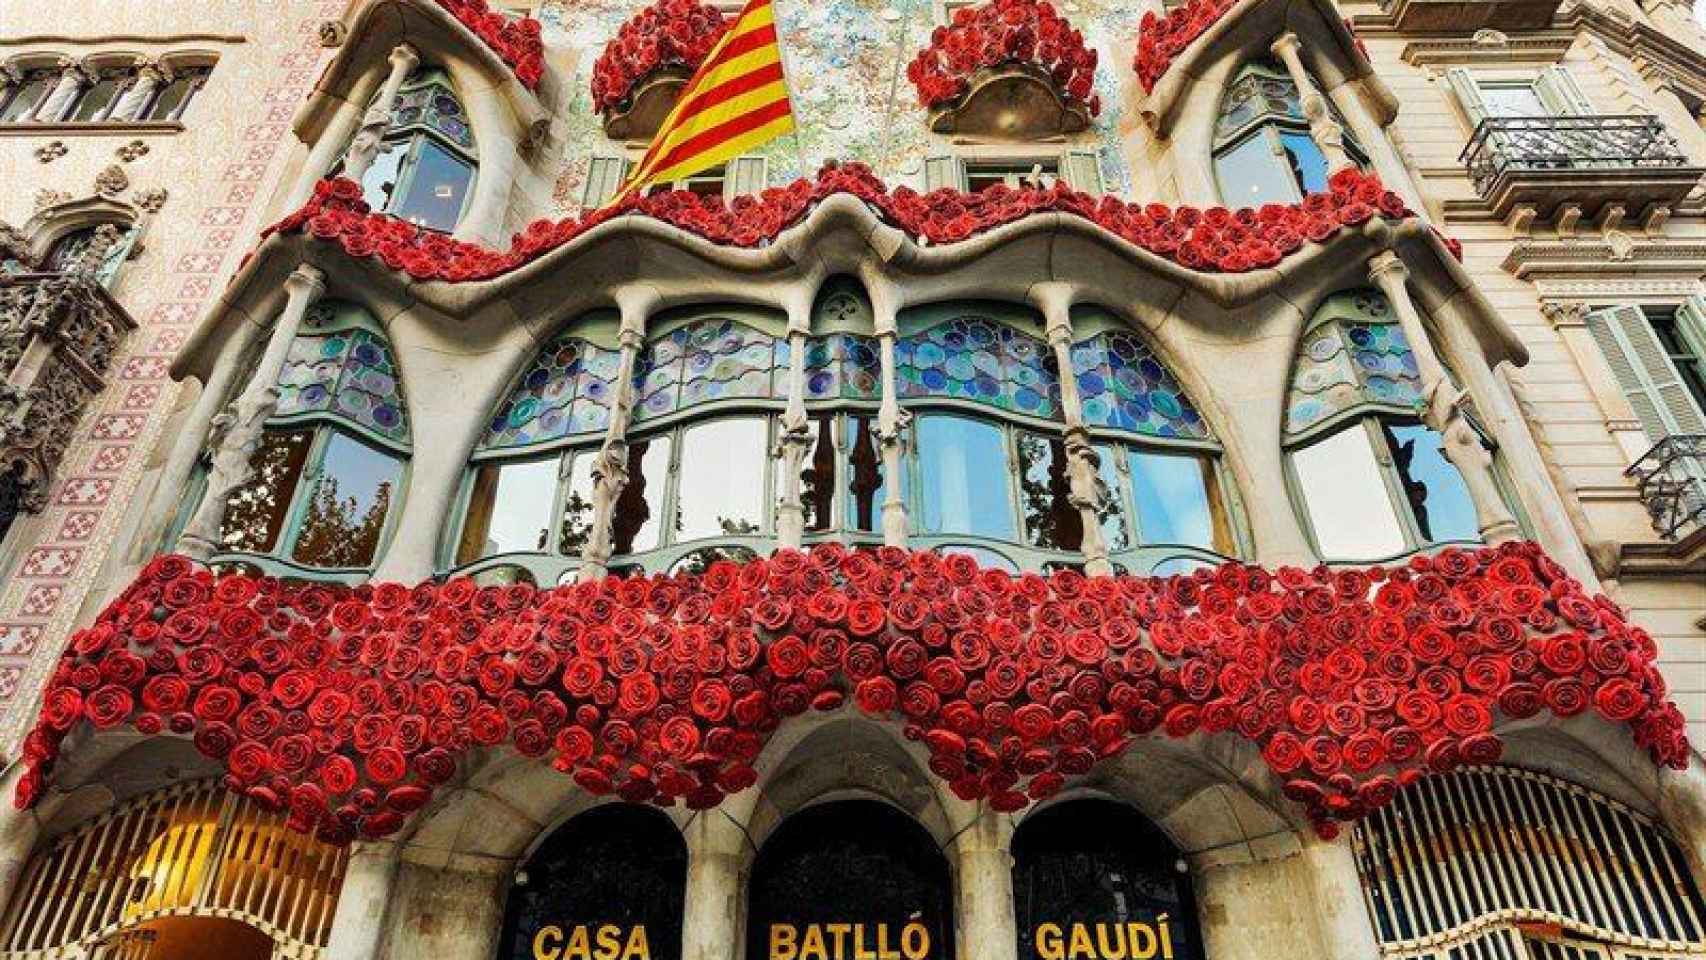 La Casa Batlló decorada con rosas rojas / TWITTER